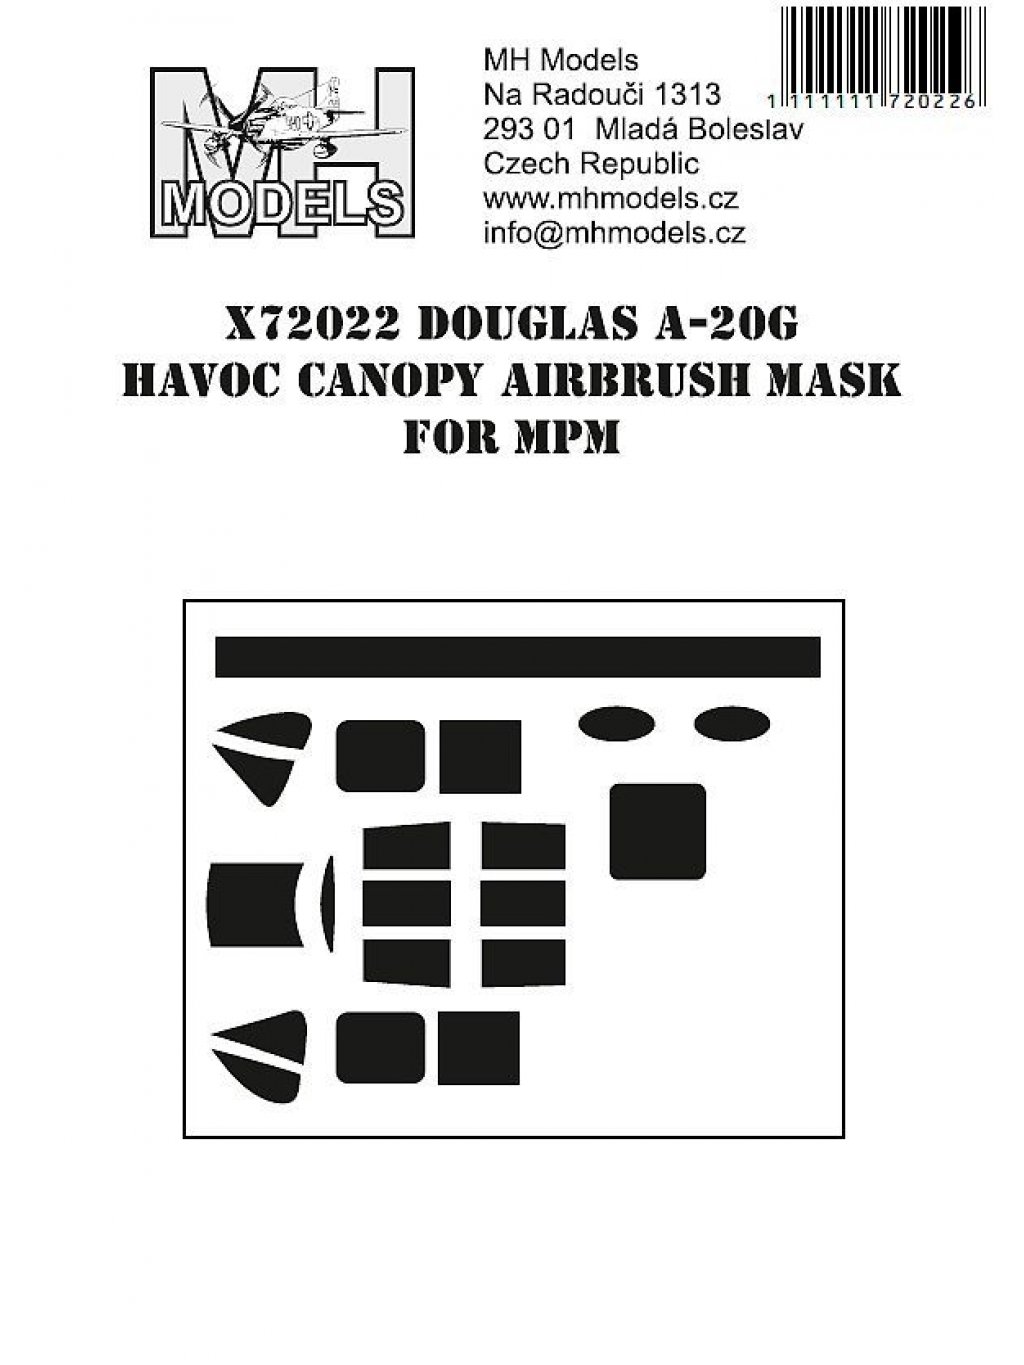 Douglas A-20G Havoc canopy airbrush mask for MPM